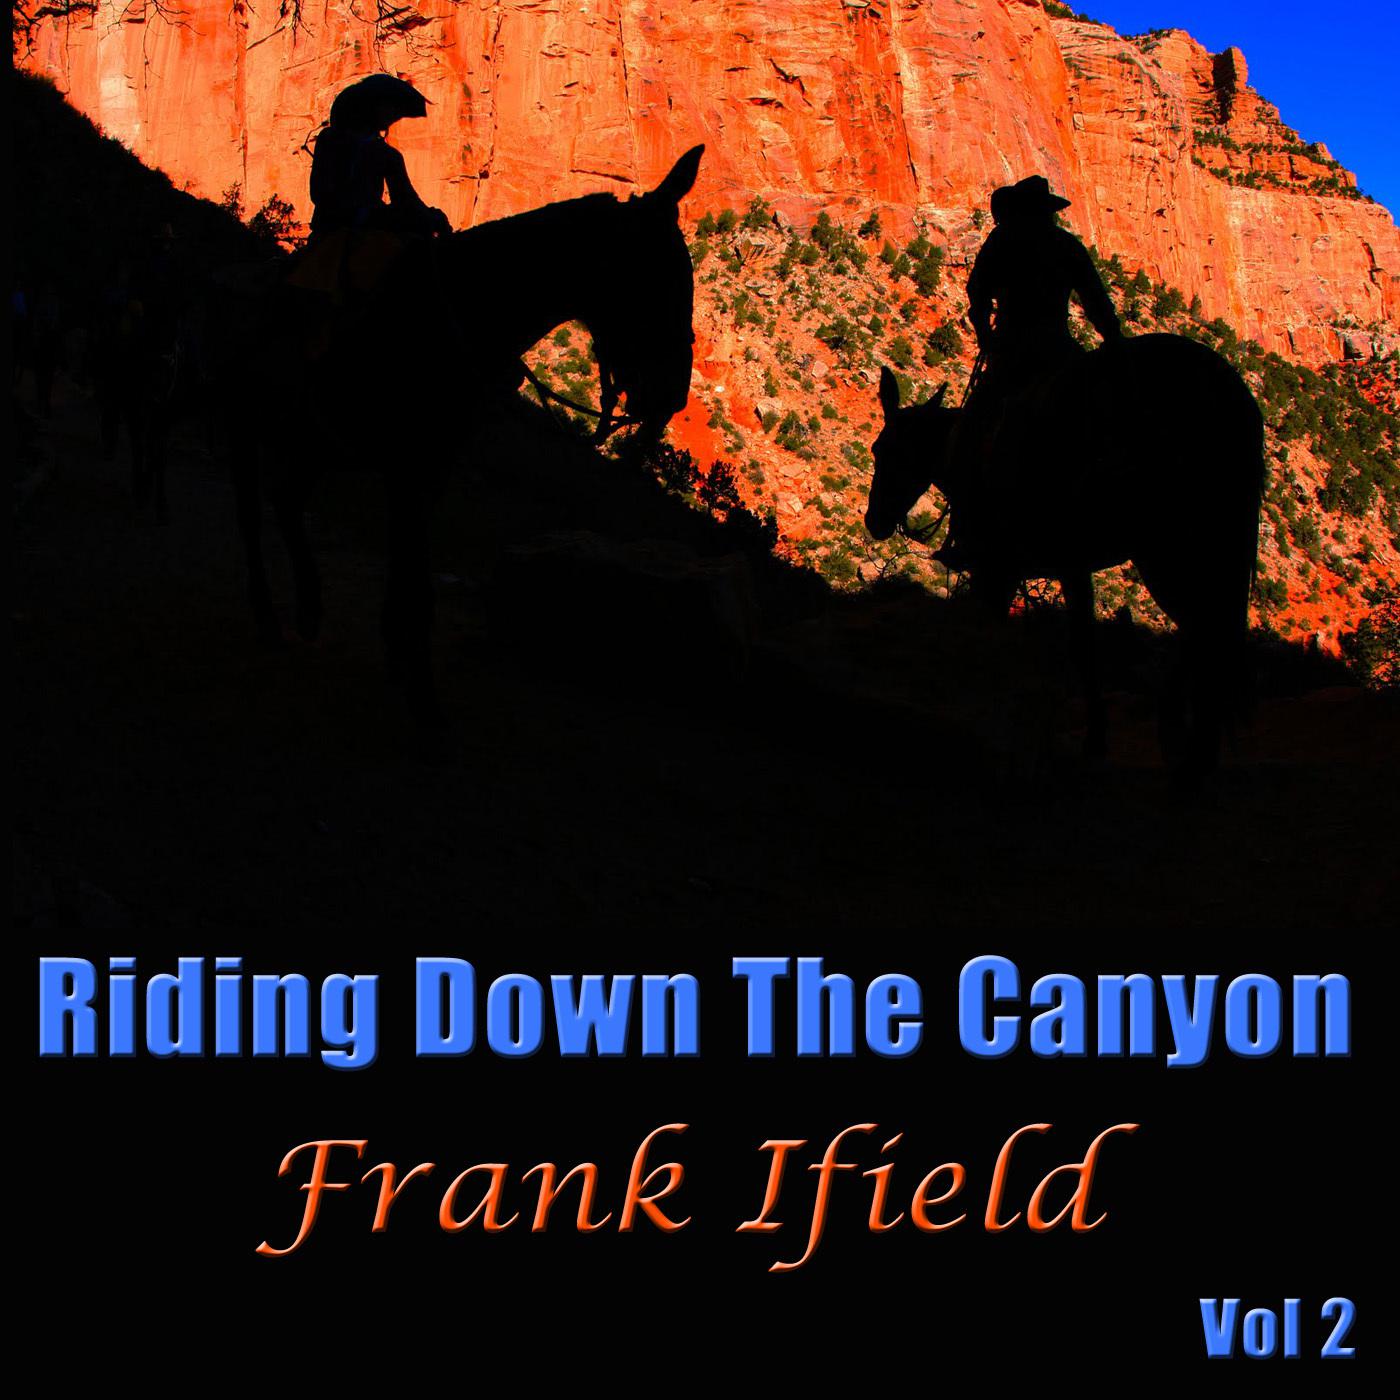 Riding Down The Canyon, Vol. 2